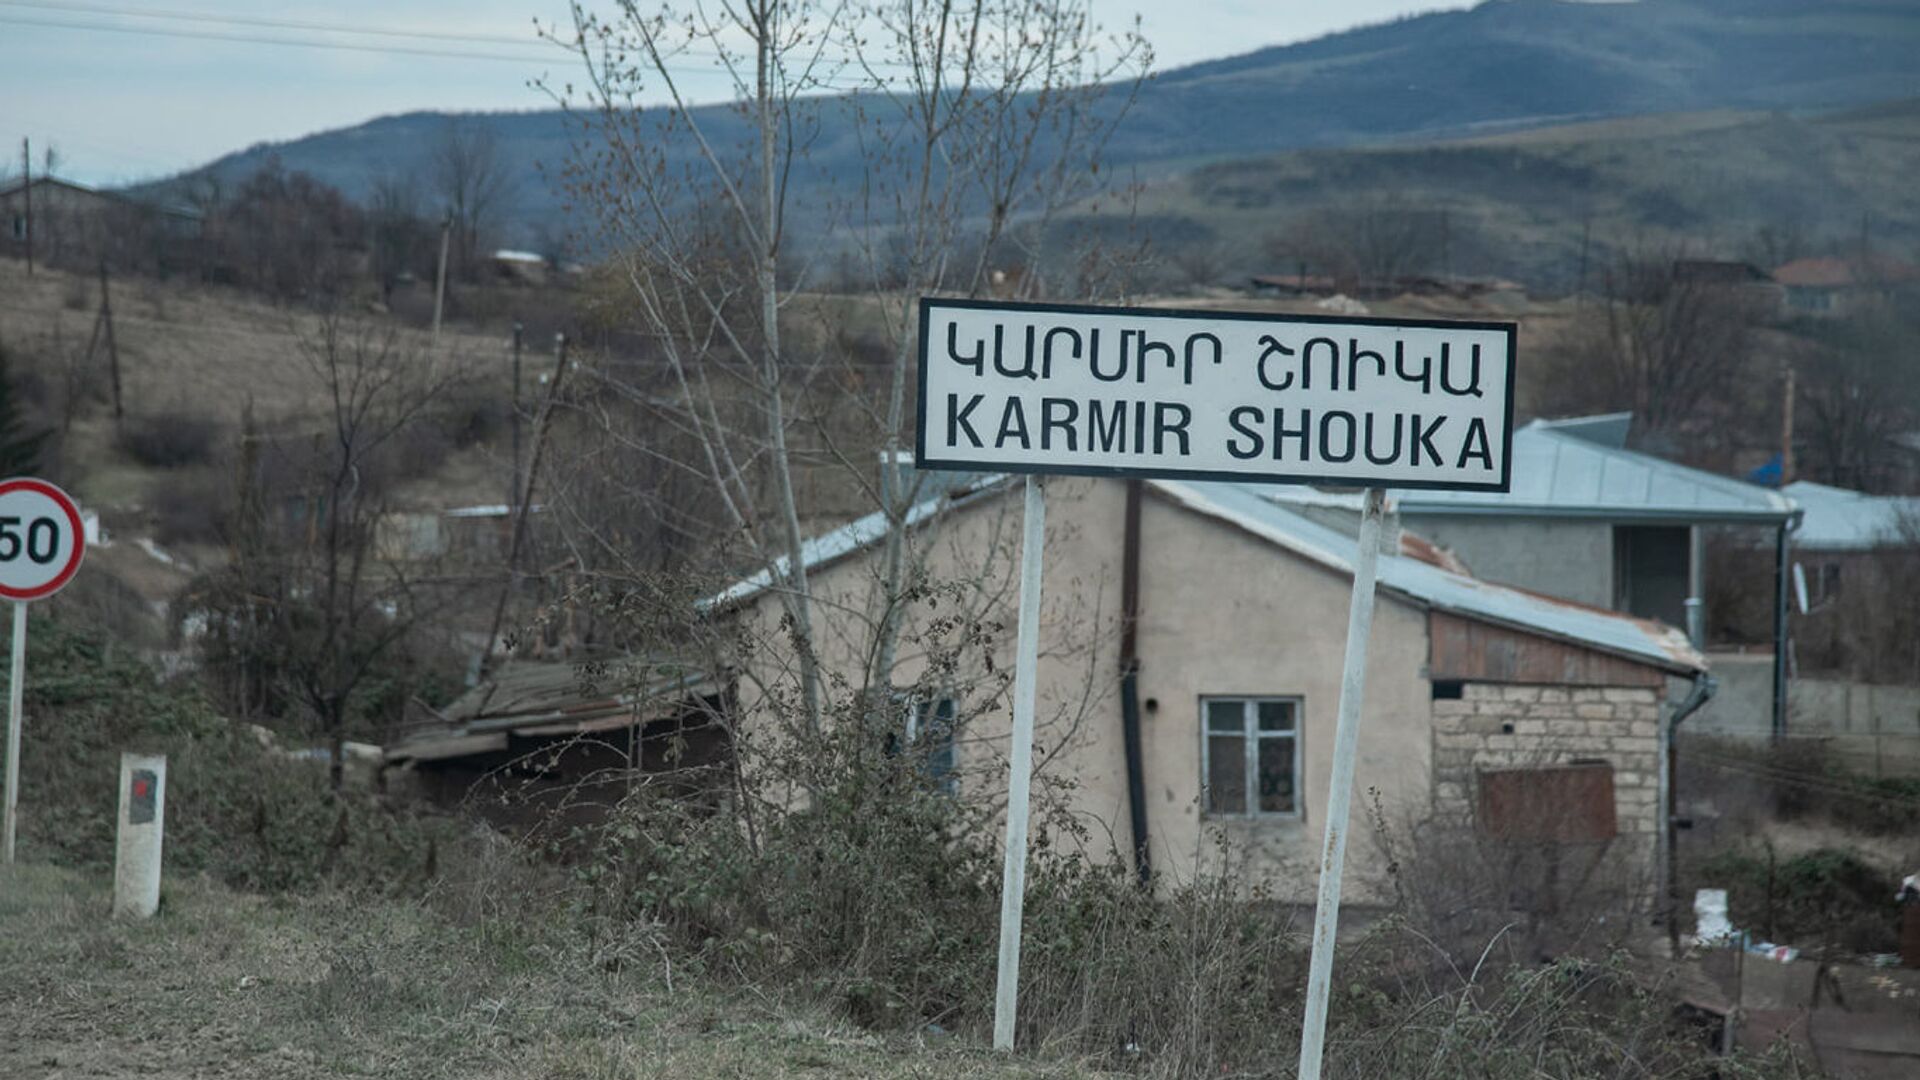 Село Кармир Шука в Карабахе - Sputnik Армения, 1920, 04.05.2021